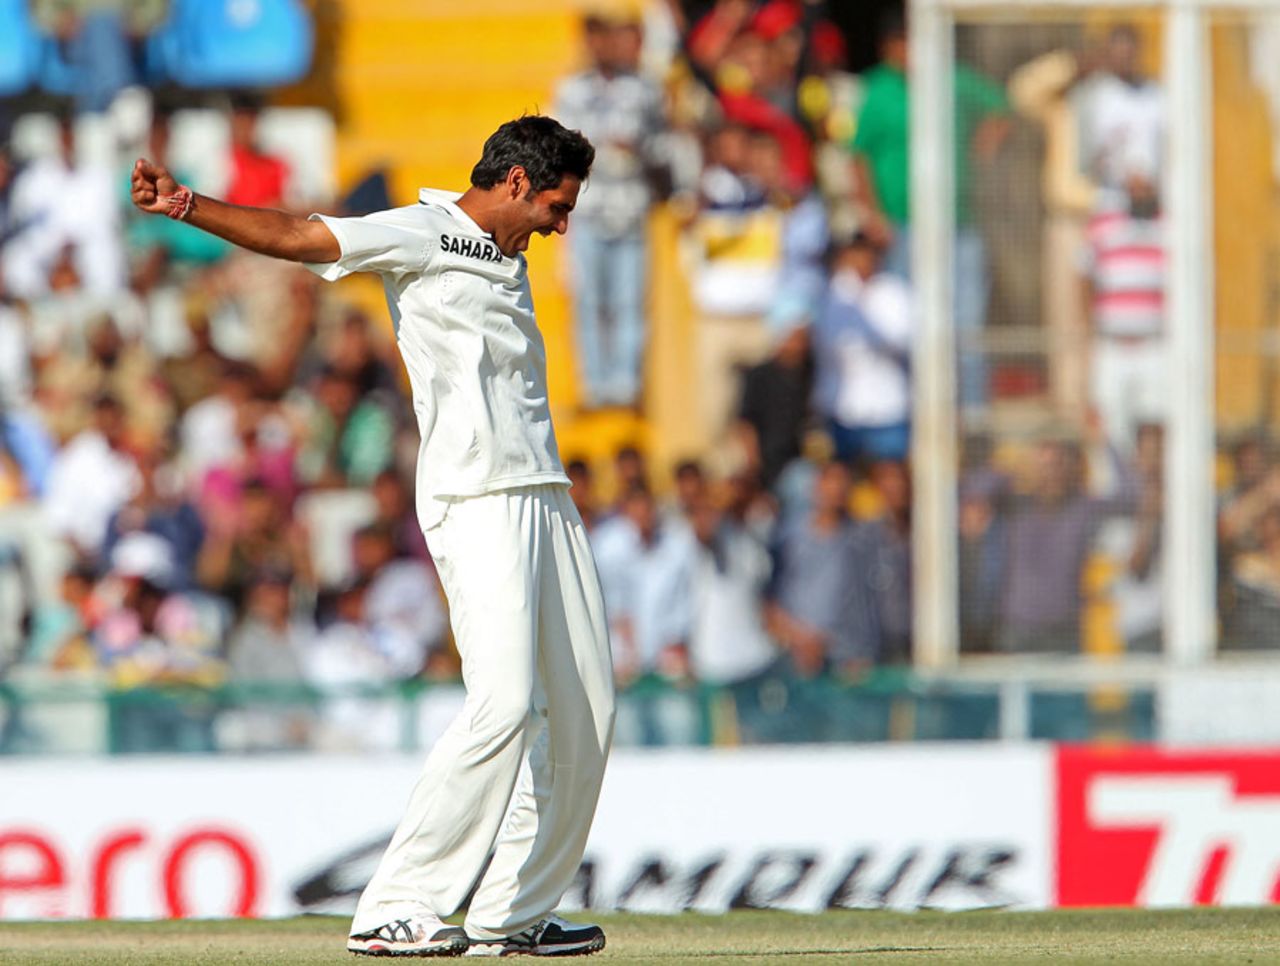 Bhuvneshwar Kumar is ecstatic after striking early, India v Australia, 3rd Test, Mohali, 4th day, March 17, 2013